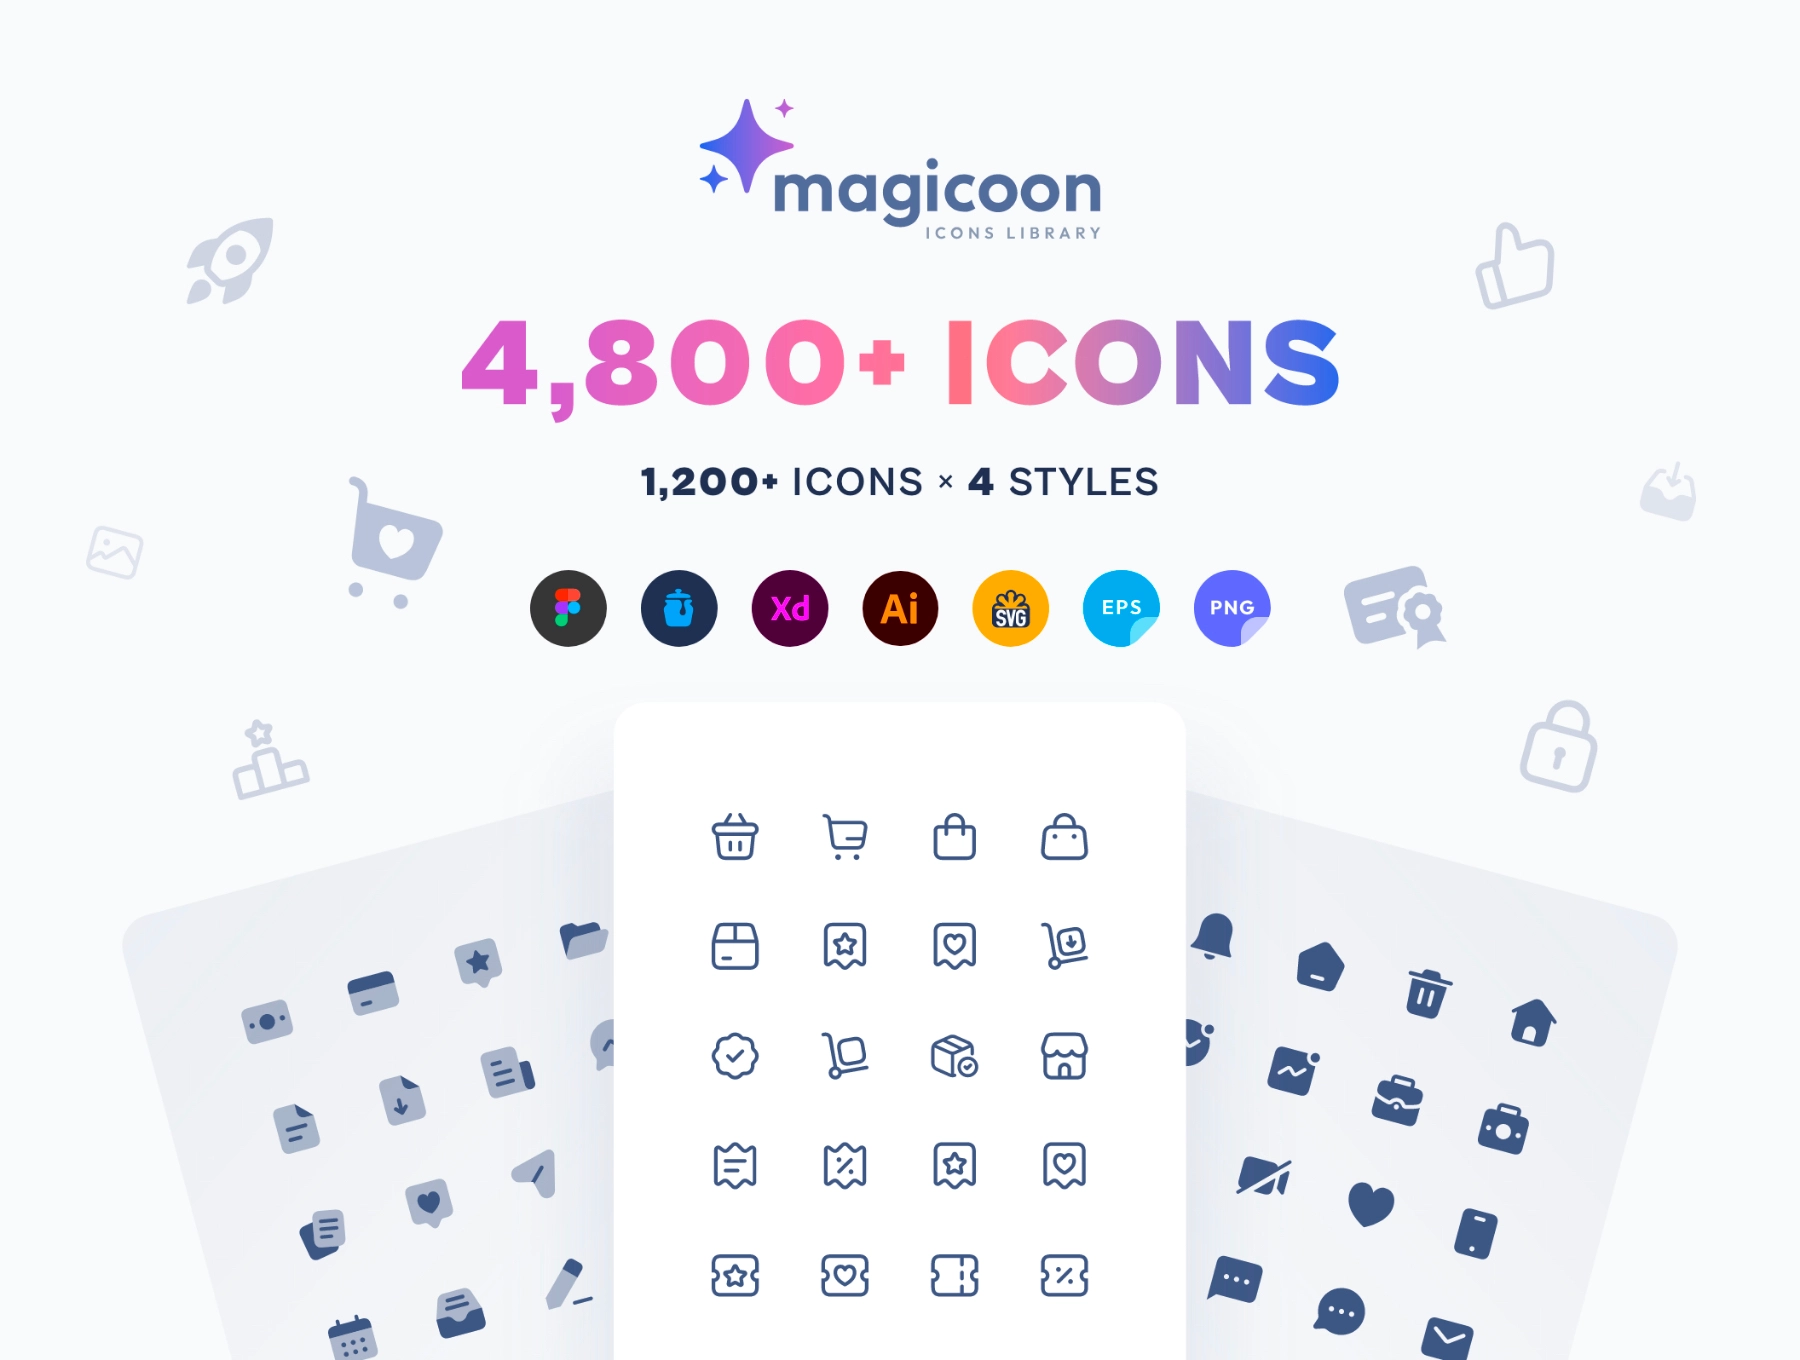 [VIP] magicoon: 4,800+ UI icons library